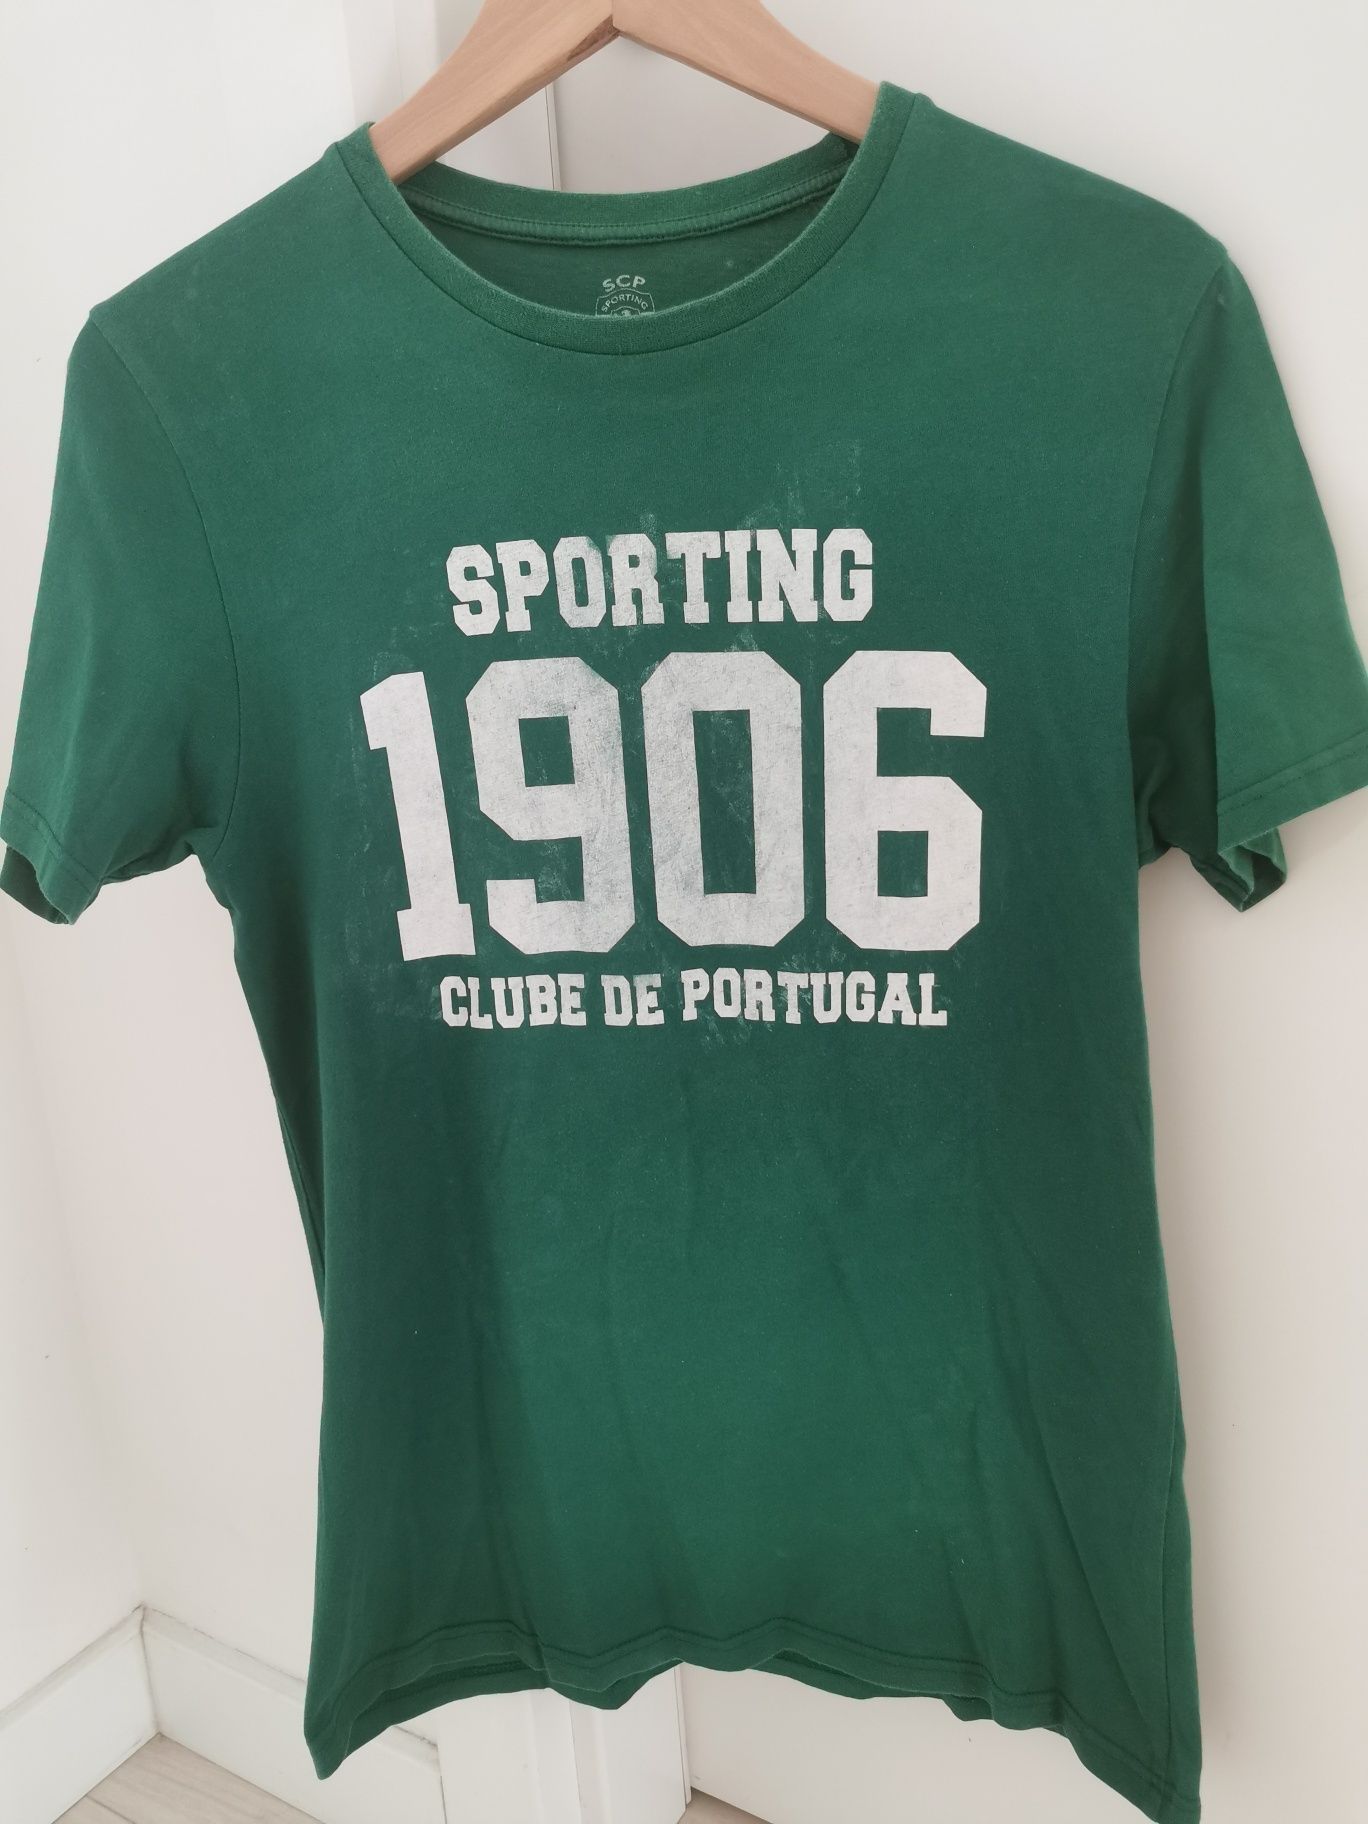 Sporting - T-shirt (Tamanho M)